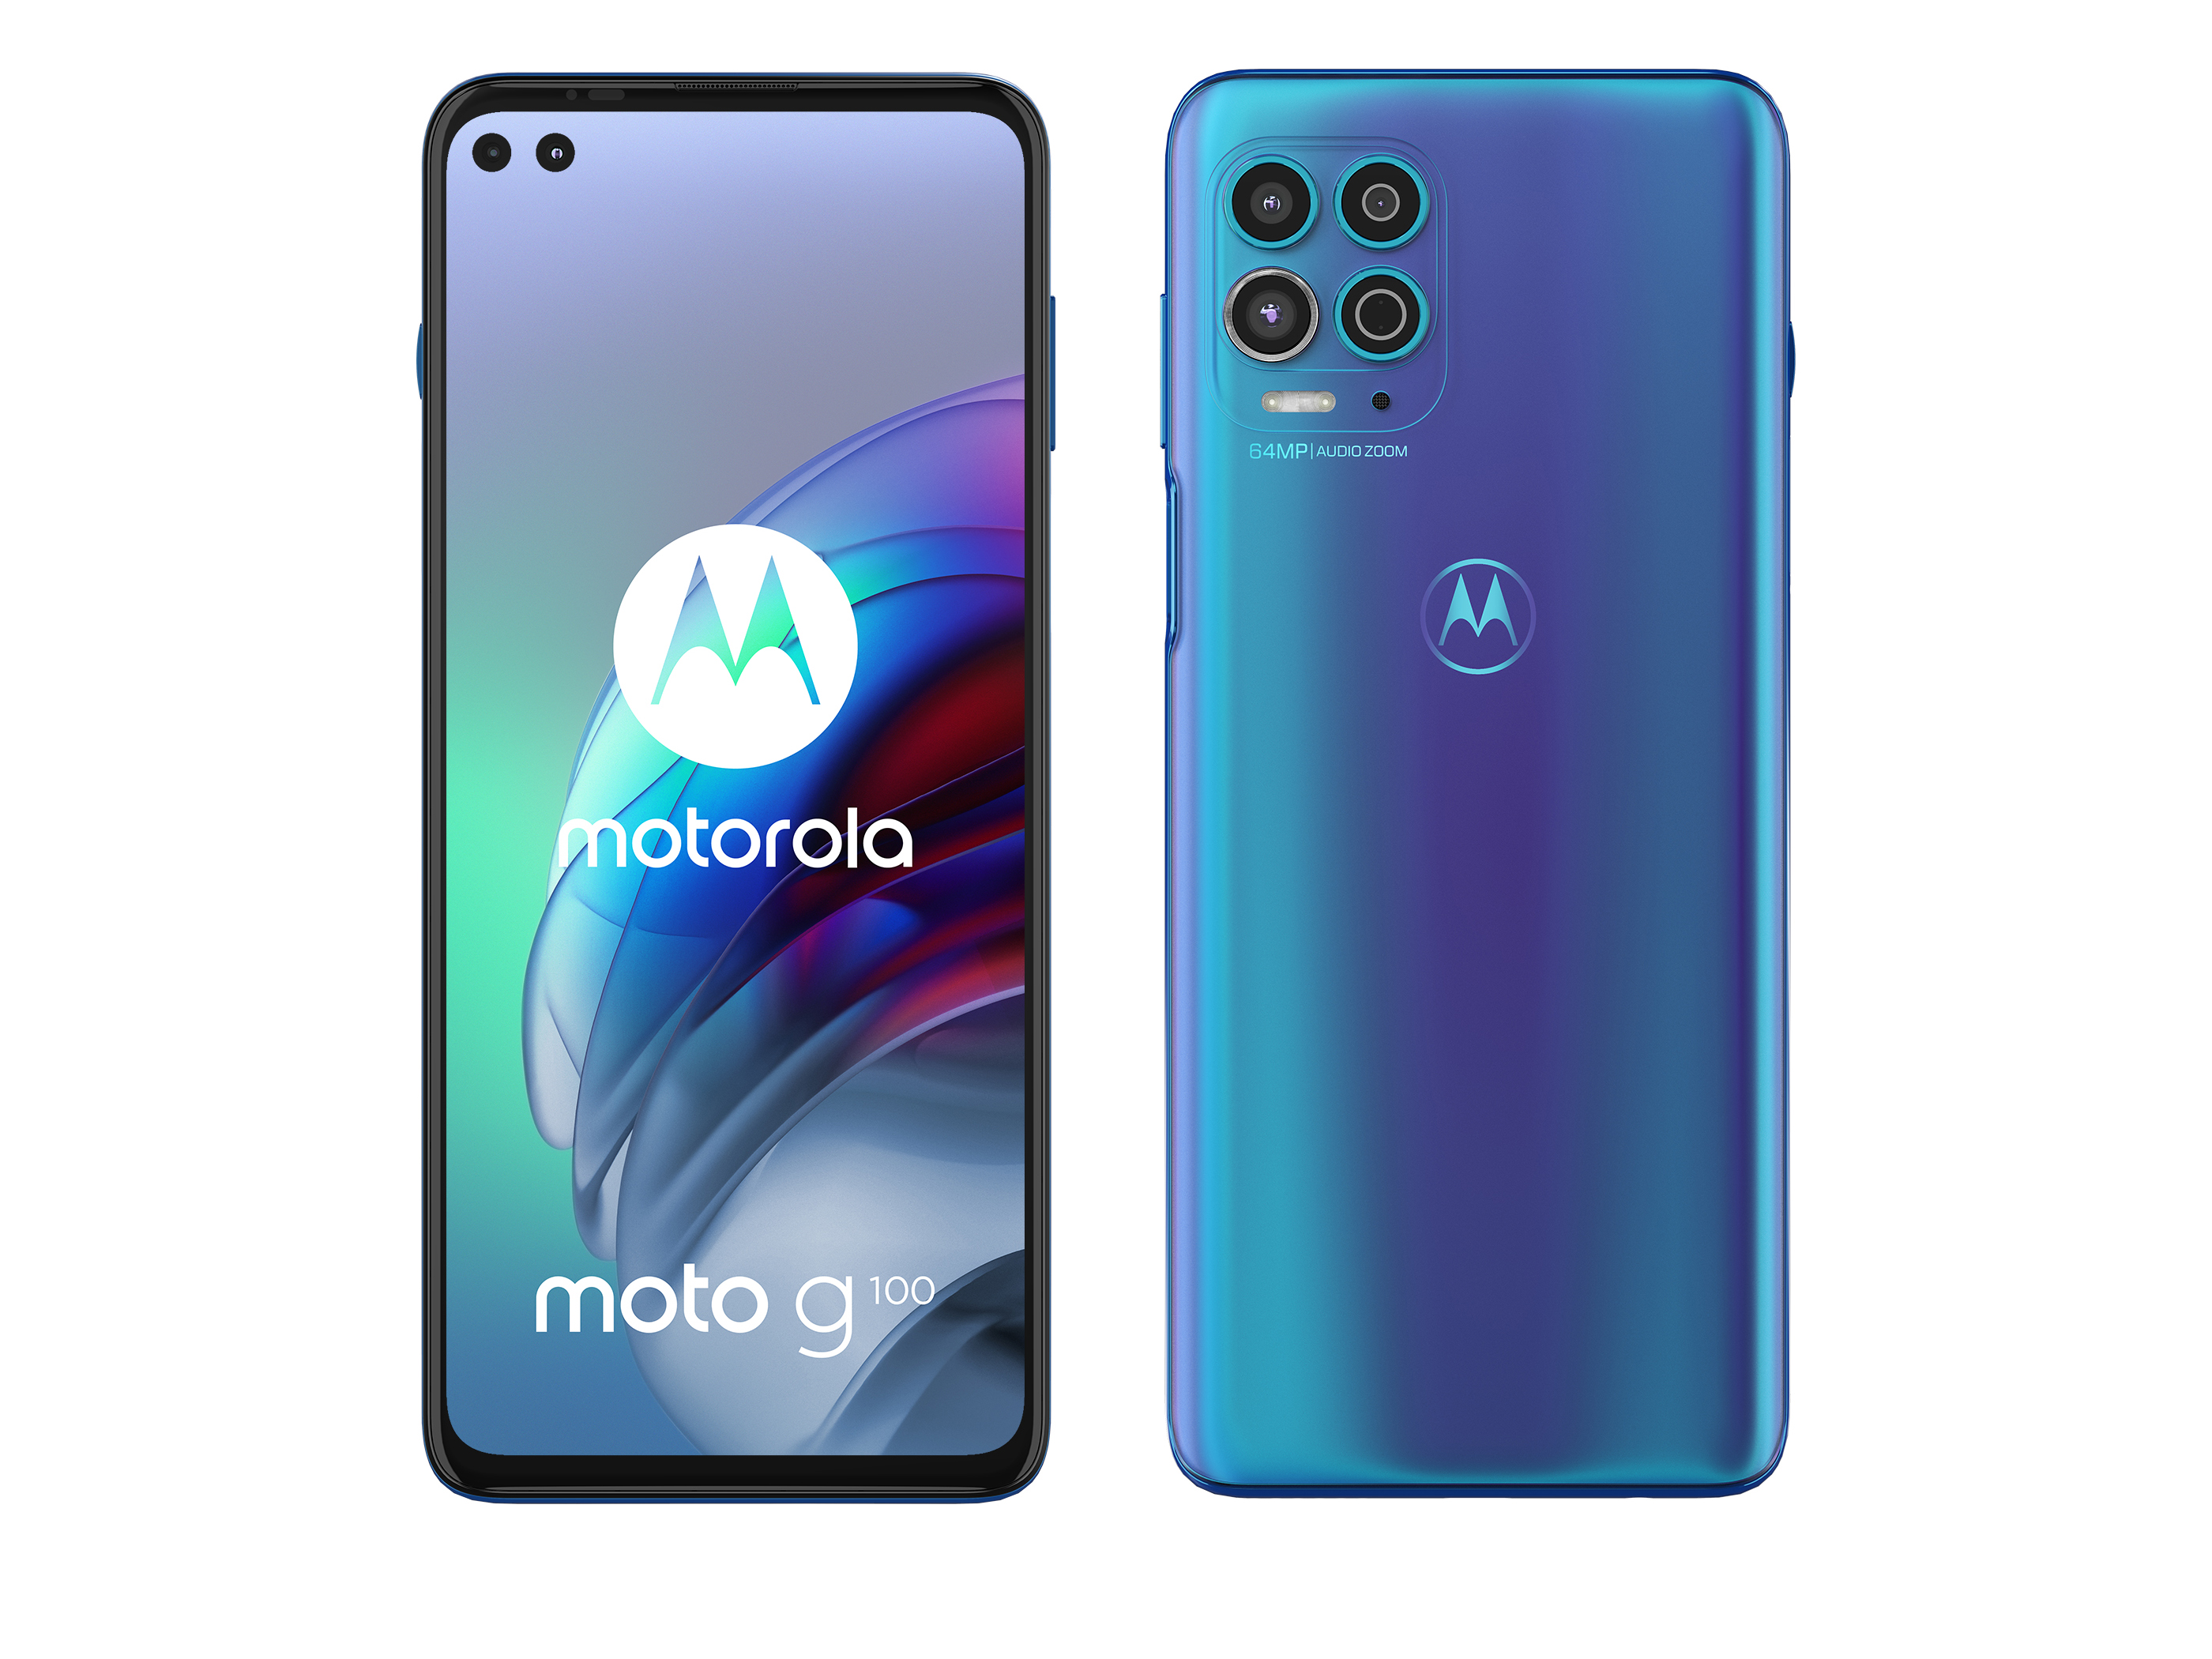 influenza adelaar Oogverblindend Motorola Moto G100 smartphone review: Snelle 5G mobiele telefoon als  pc-vervanger - Notebookcheck.nl